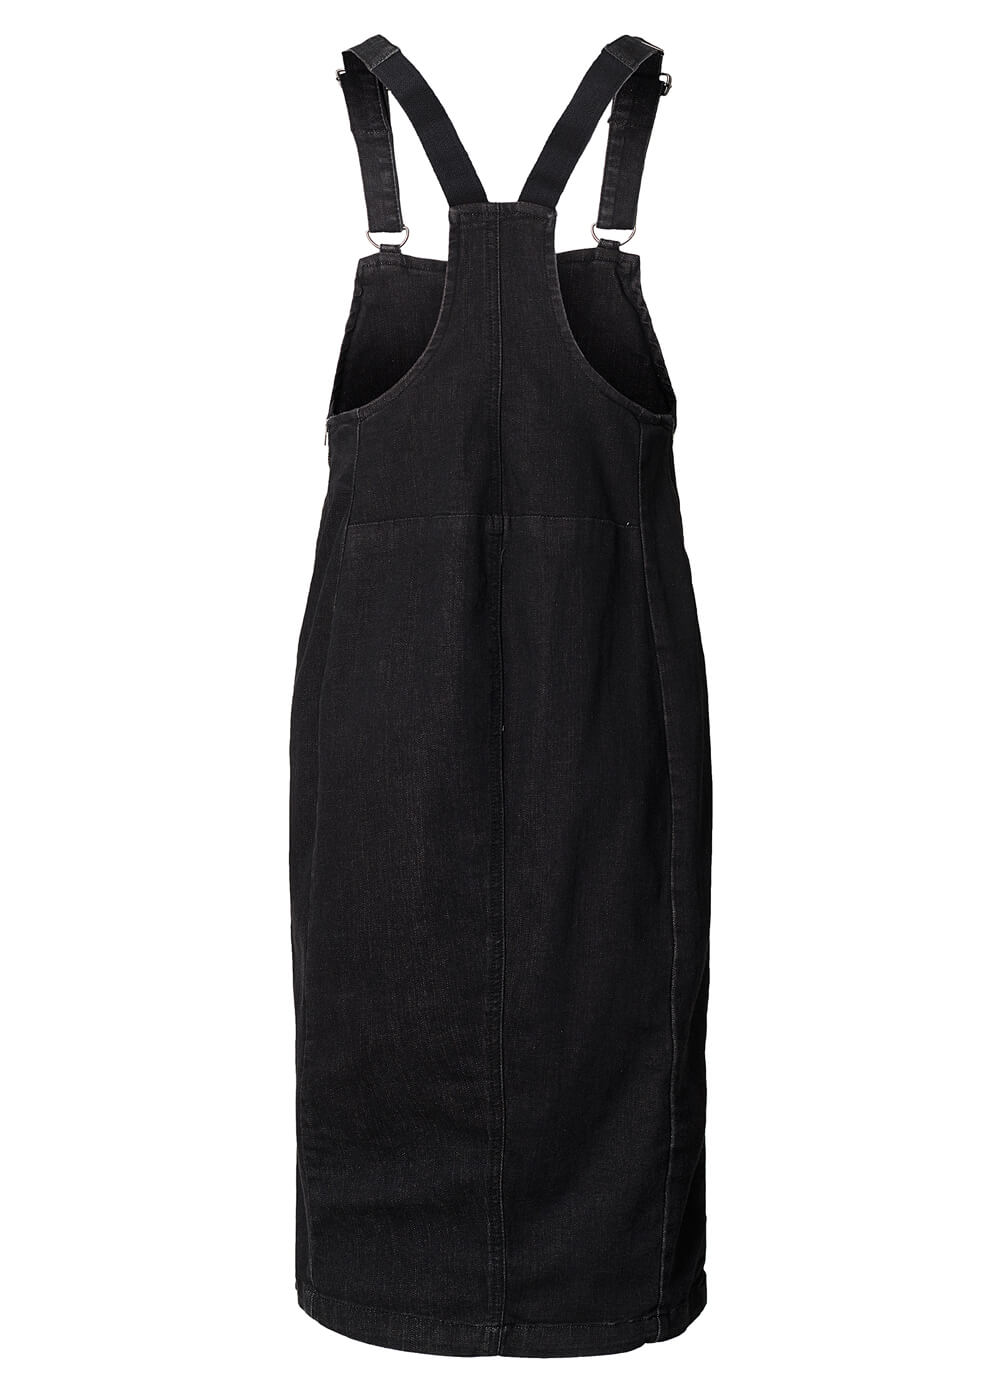 black pinafore dress australia